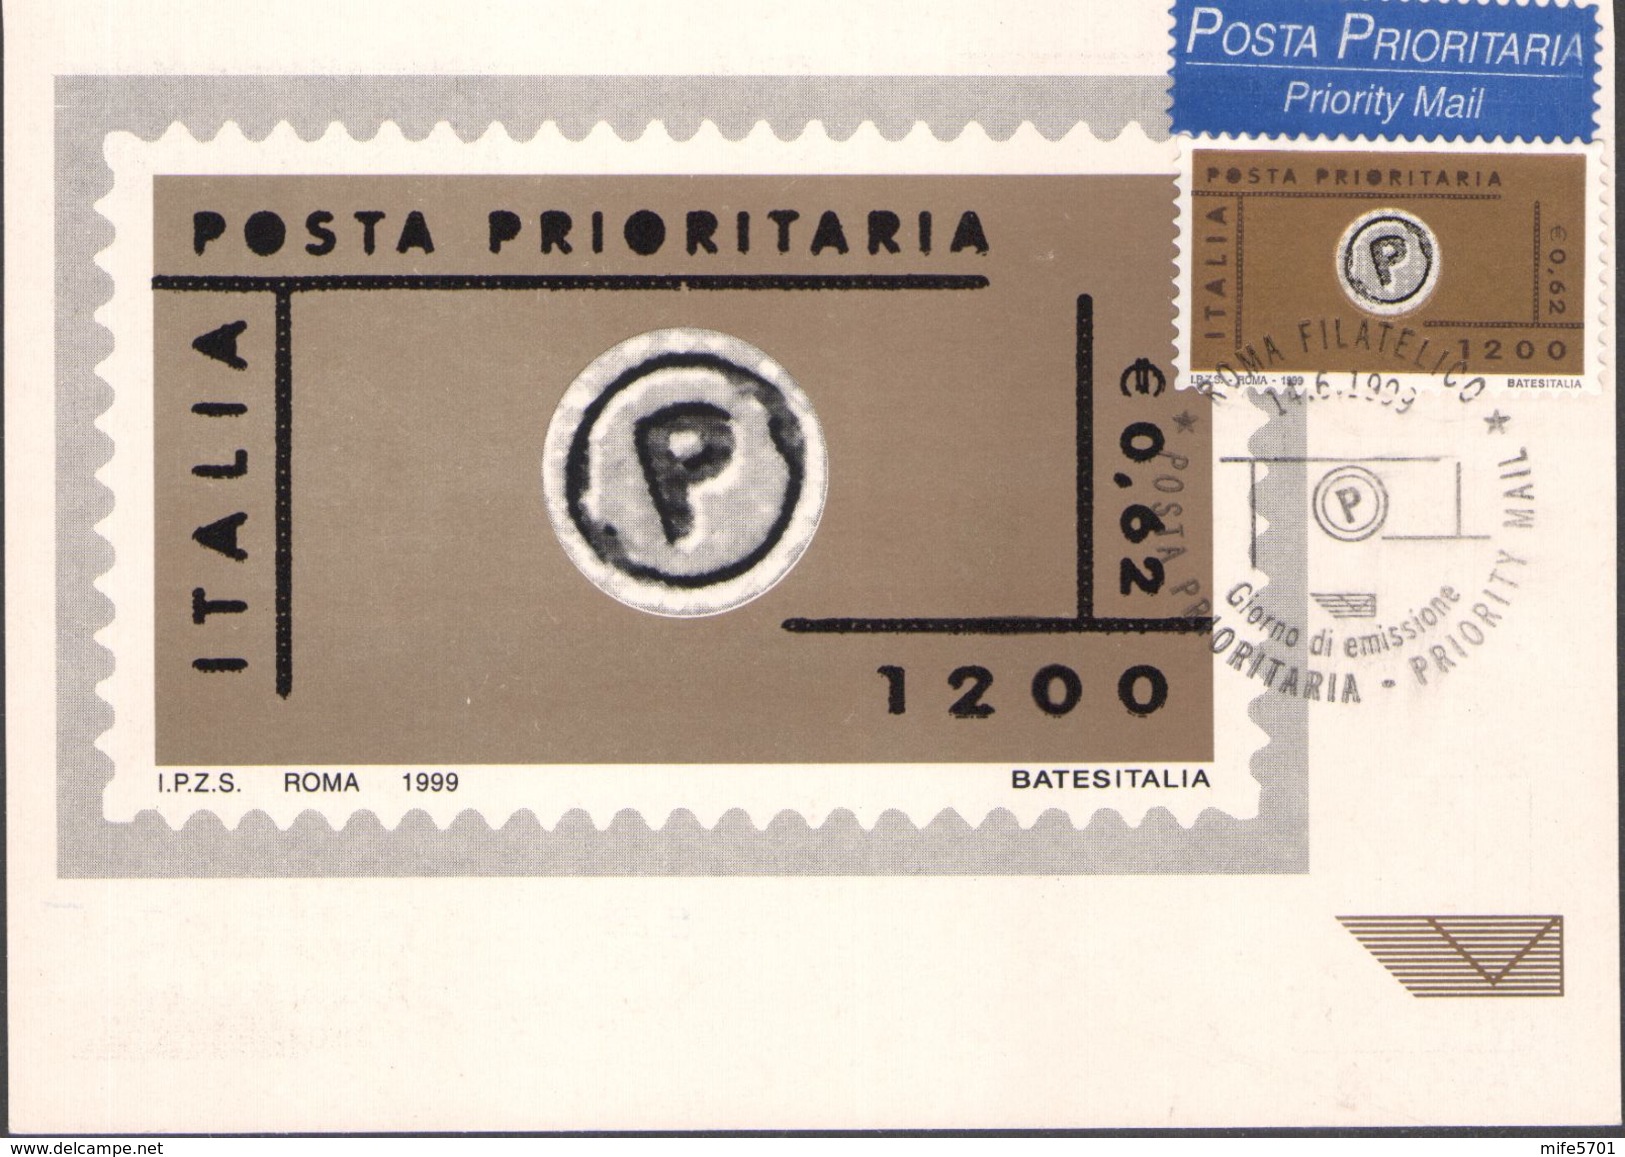 MAXCARD - CARTOLINA POSTA PRIORITARIA FRANCOBOLLO DA L. 1200 EURO 0,62 - 14.6.1999 - CATALOGO SASSONE: 2419 - FDC - Maximumkaarten